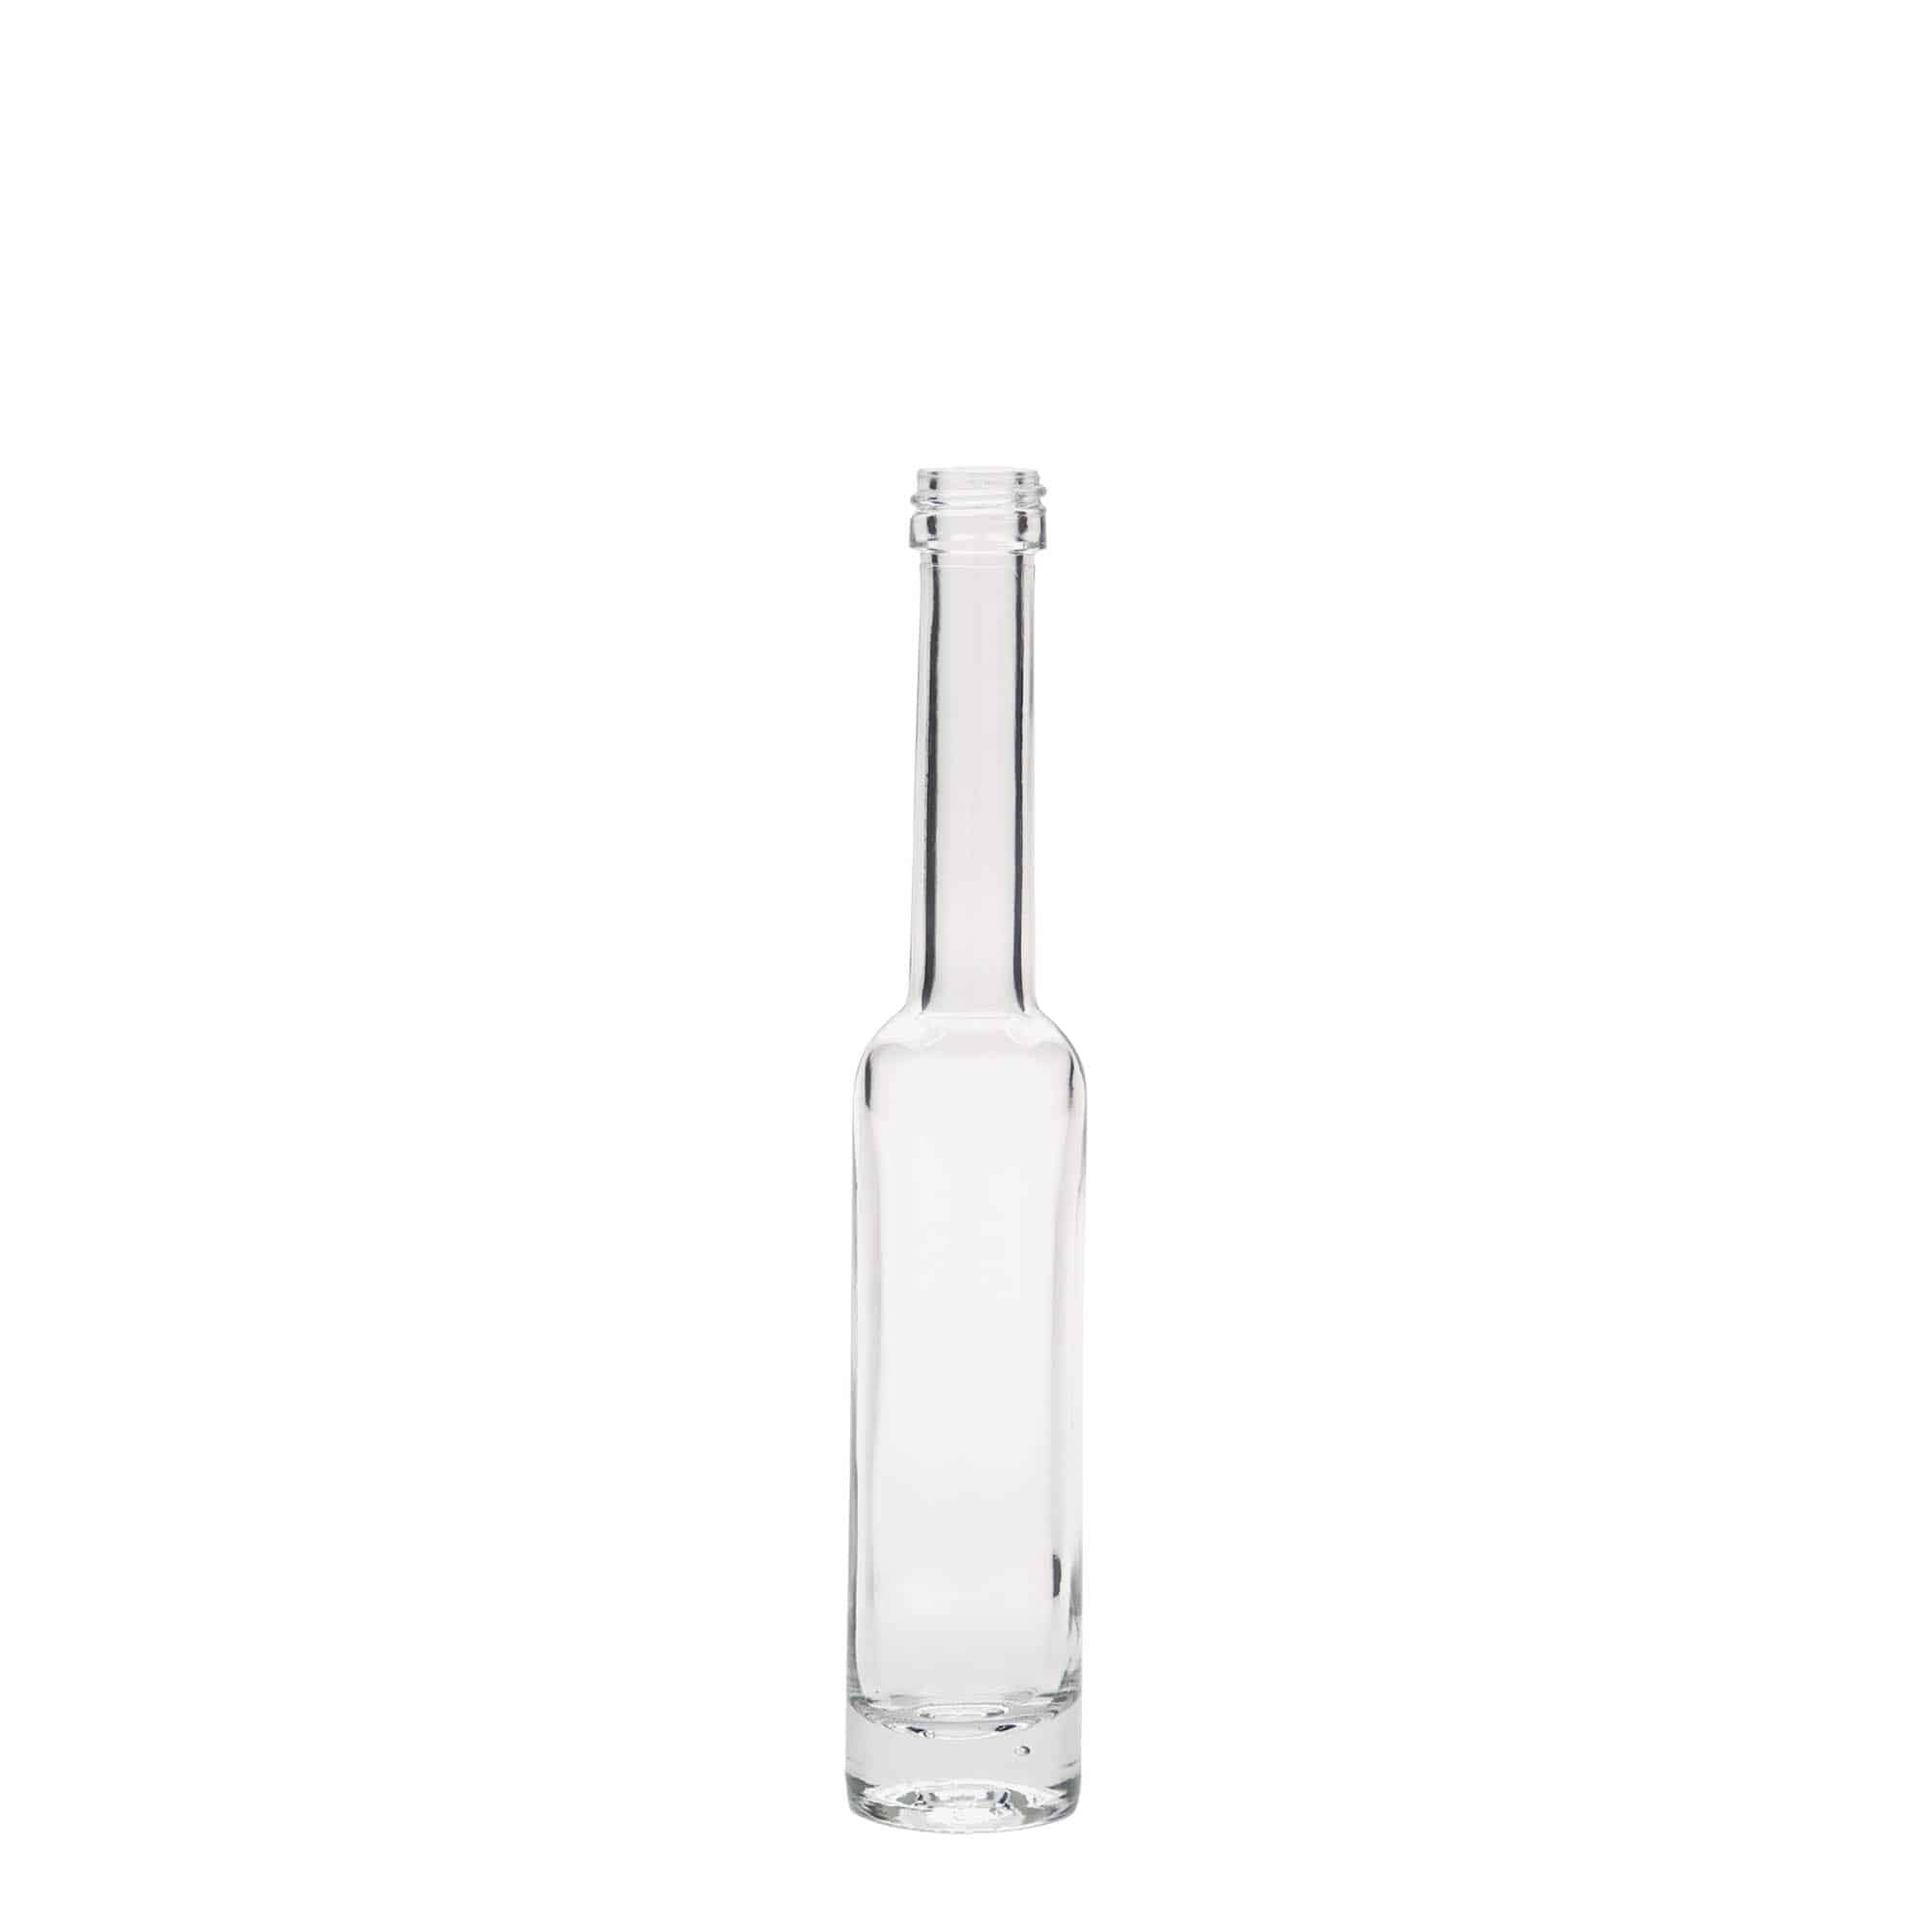 40 ml glass bottle 'Platina', closure: PP 18